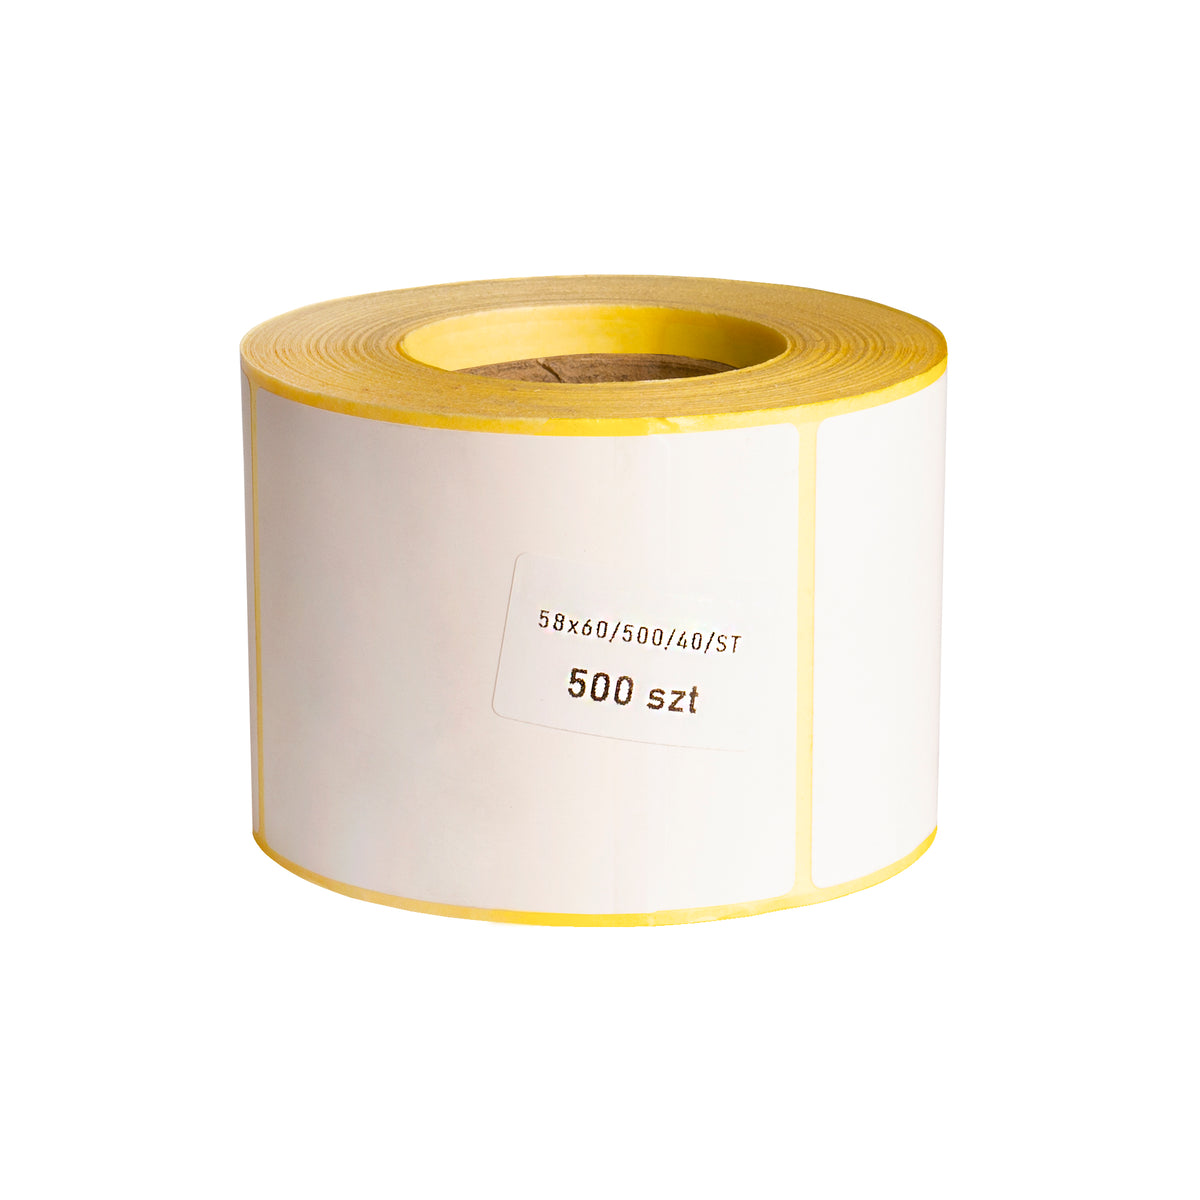 Thermal labels 58x60mm 500 per roll